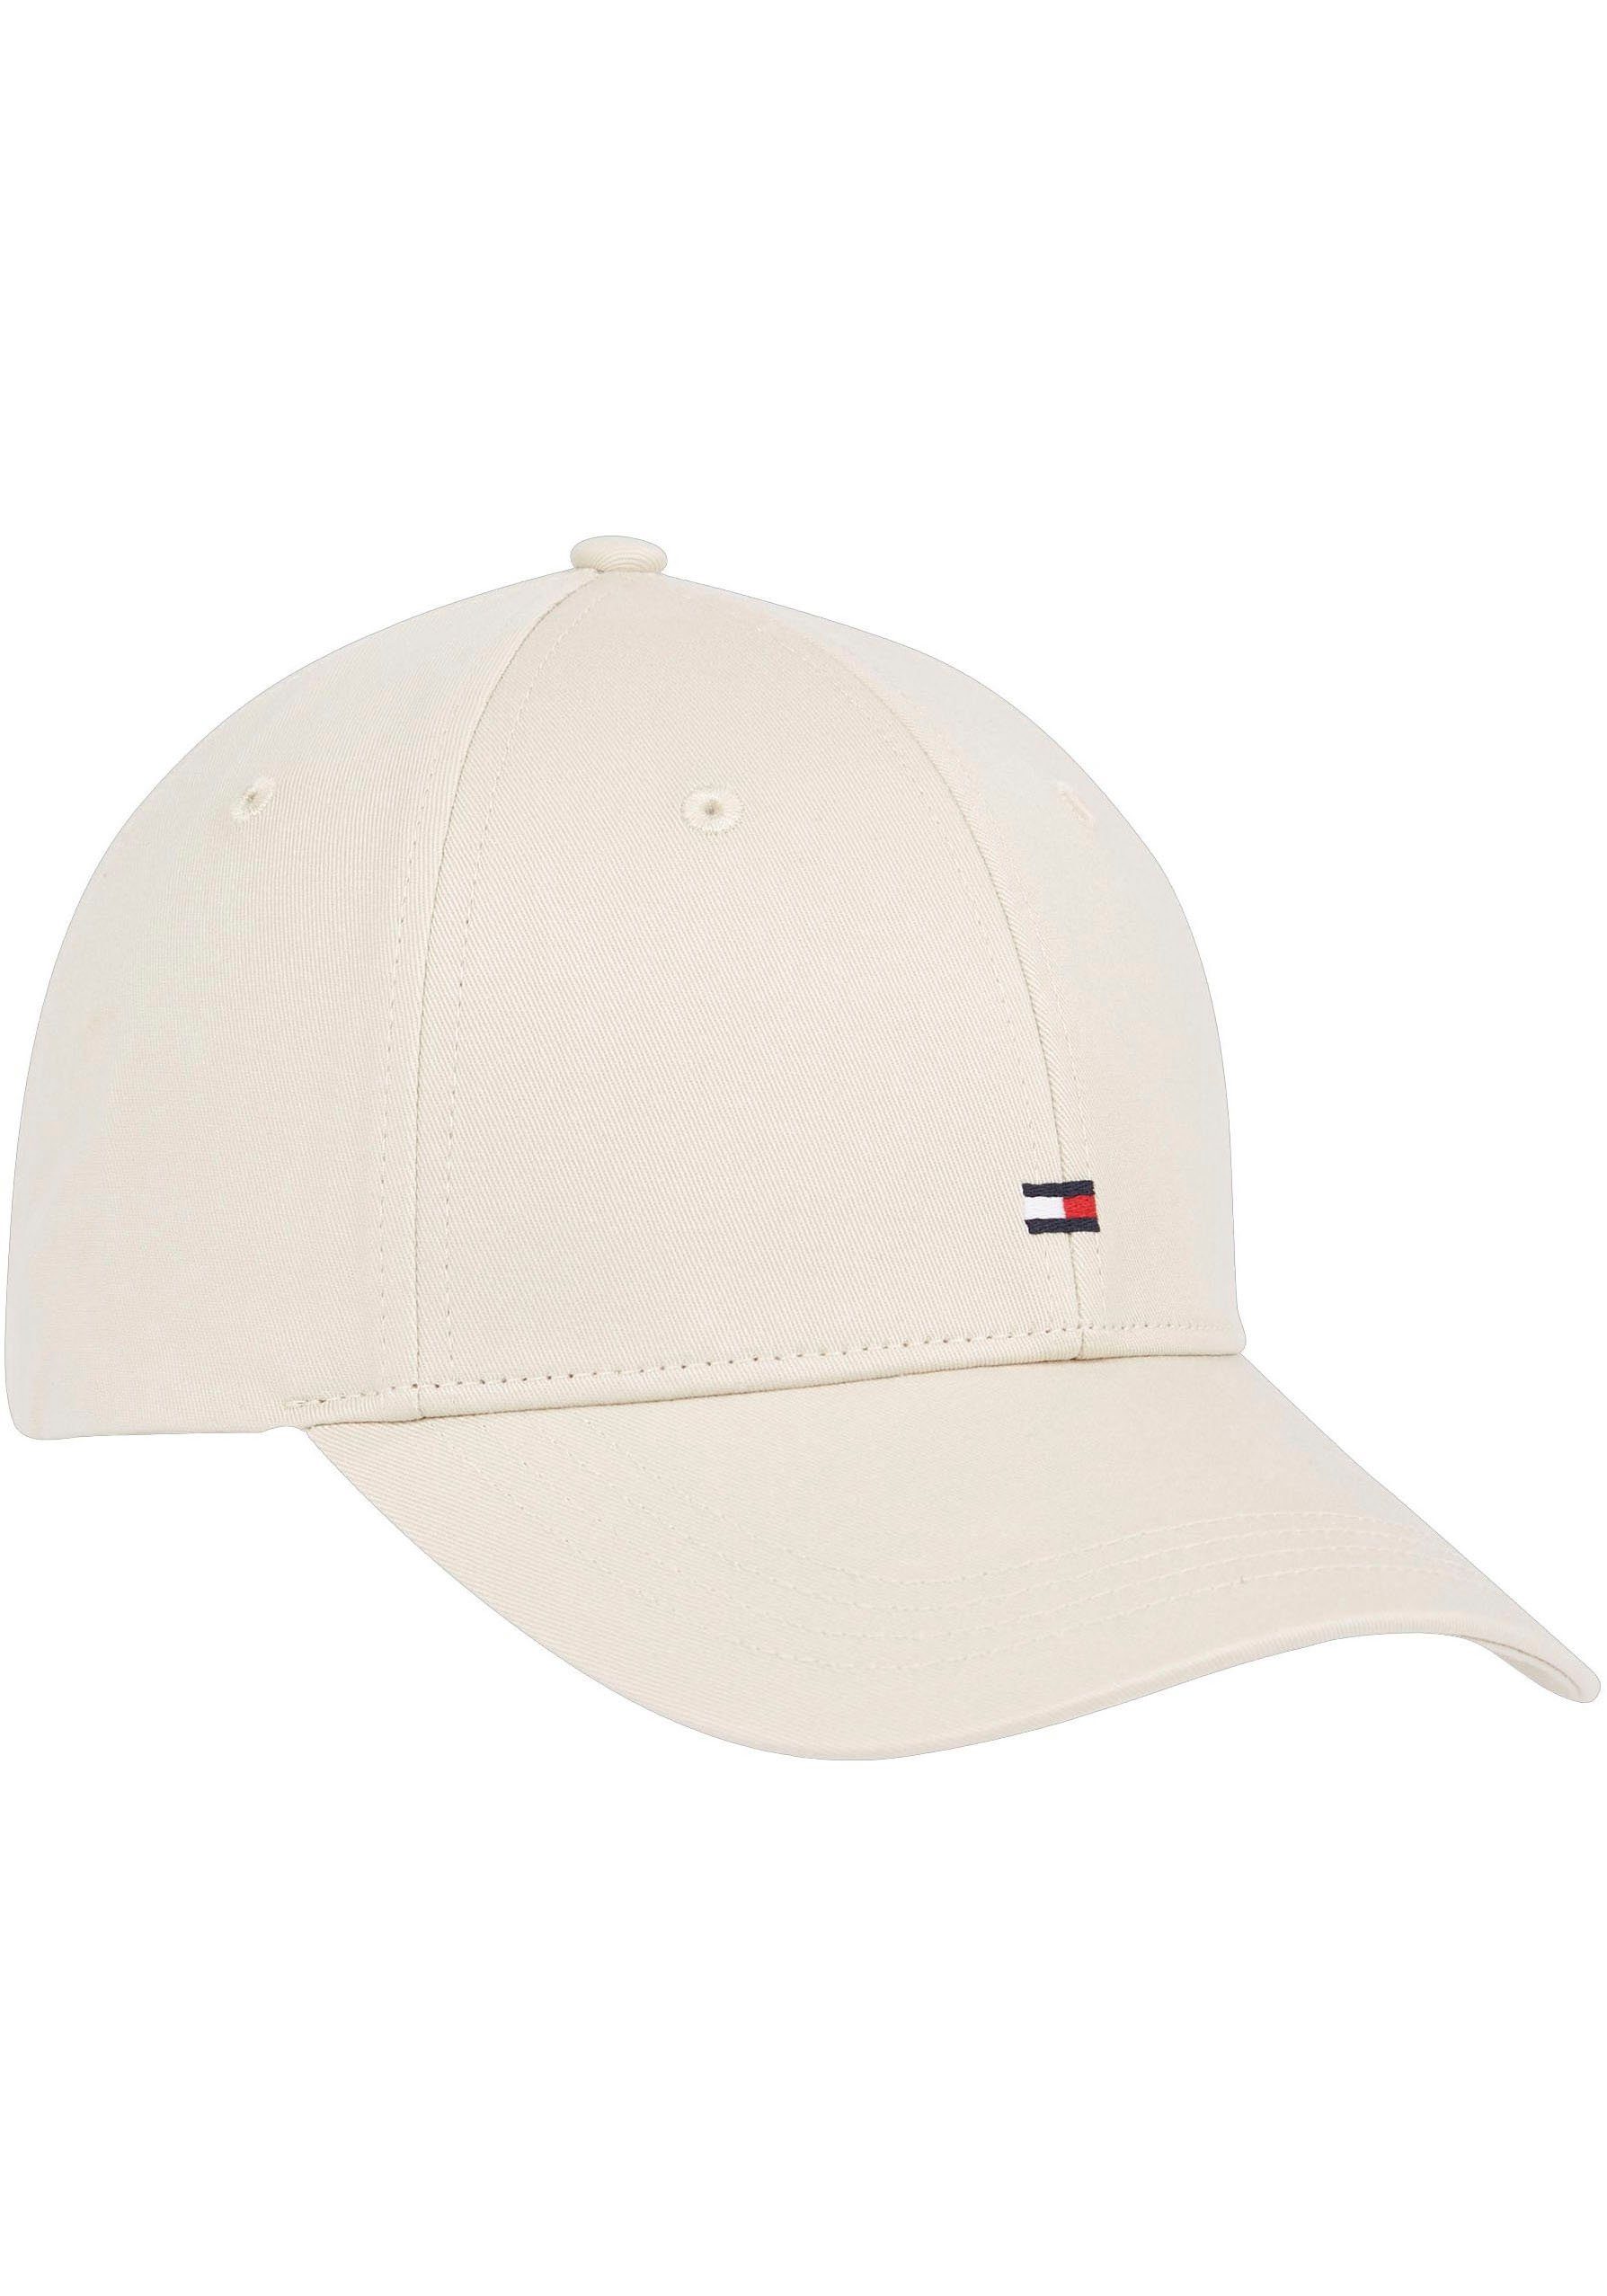 Tommy Logo-Branding Classic Baseball Hilfiger mit FLAG aufgesticktem Beige CAP Cap Cap TH